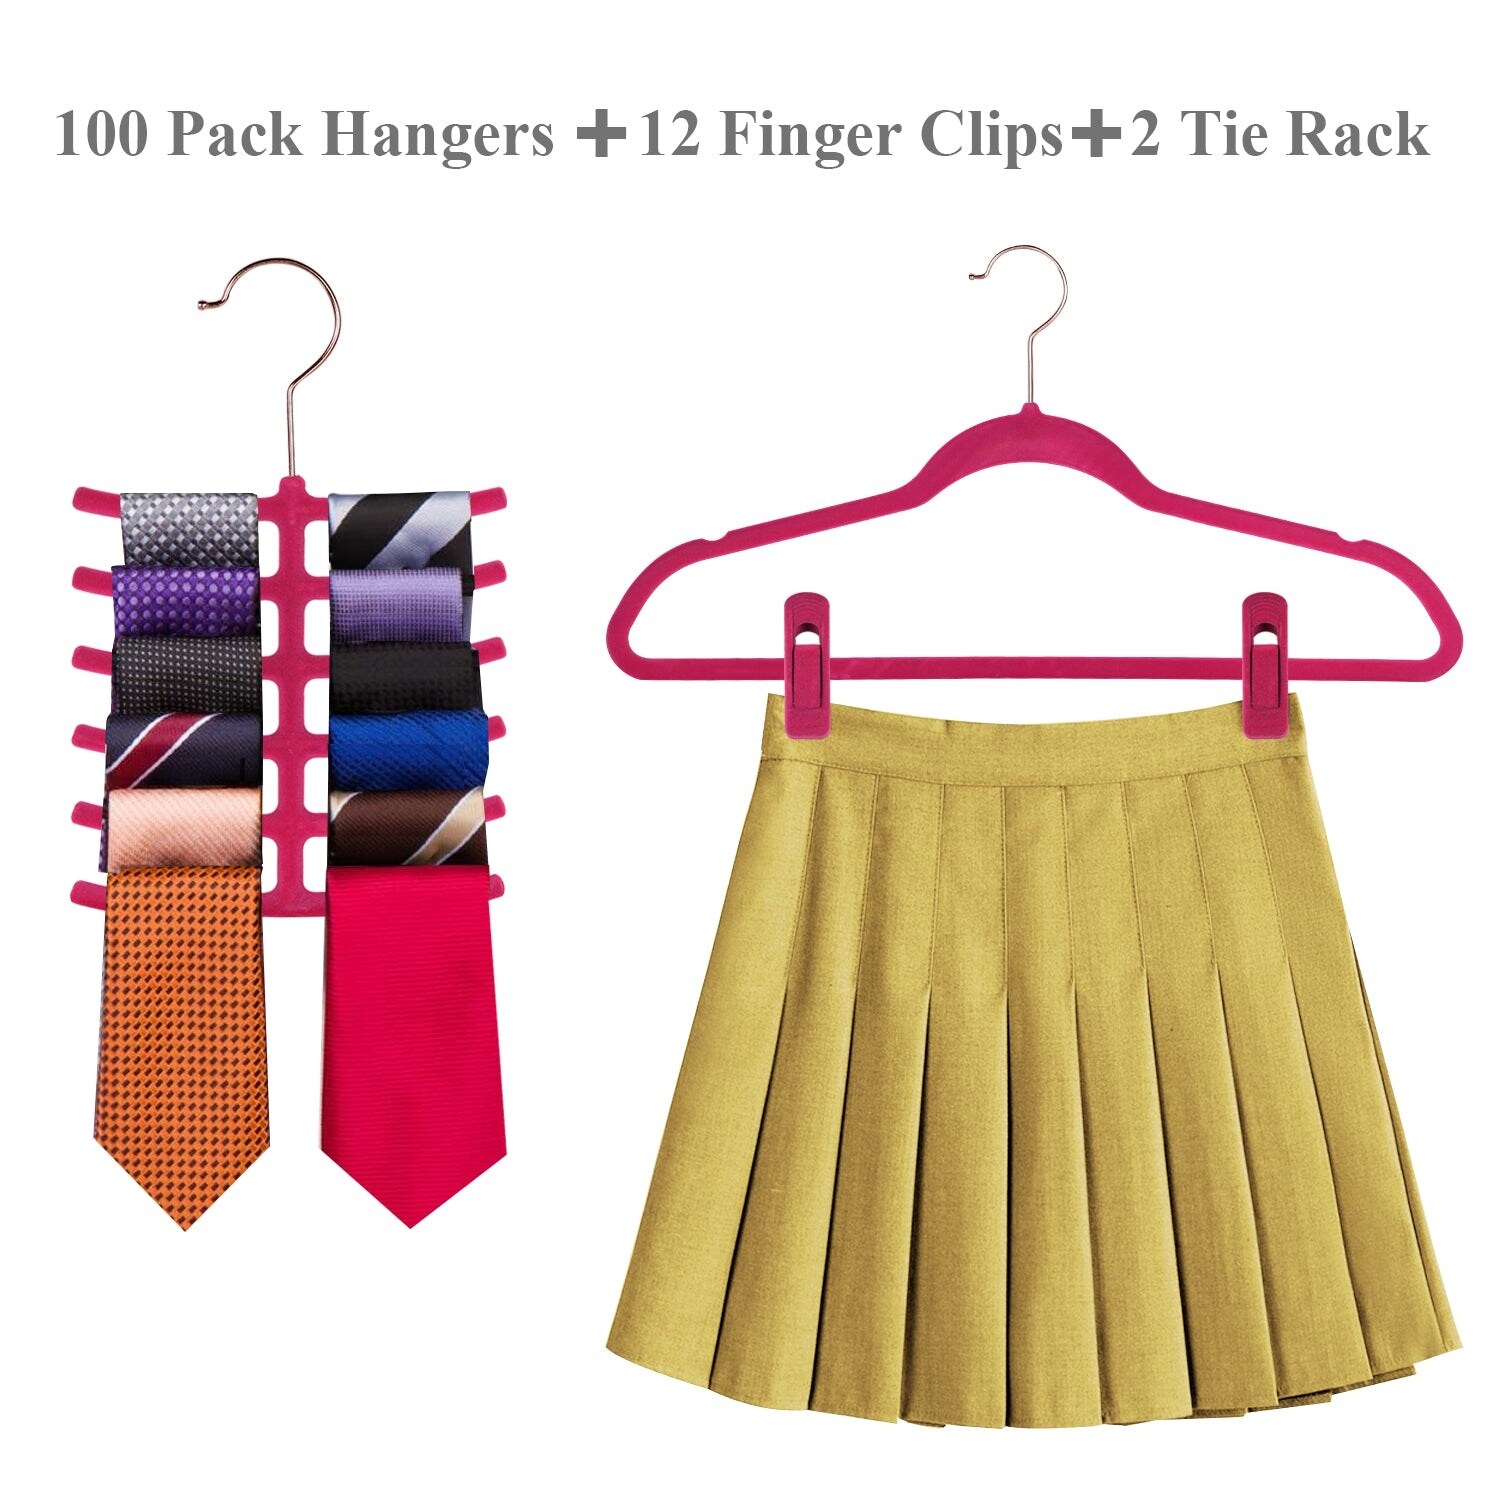 Premium Space Saving Velvet Hangers Holds Up To 10 Lbs - Black 50 Pack -  Bed Bath & Beyond - 20456937